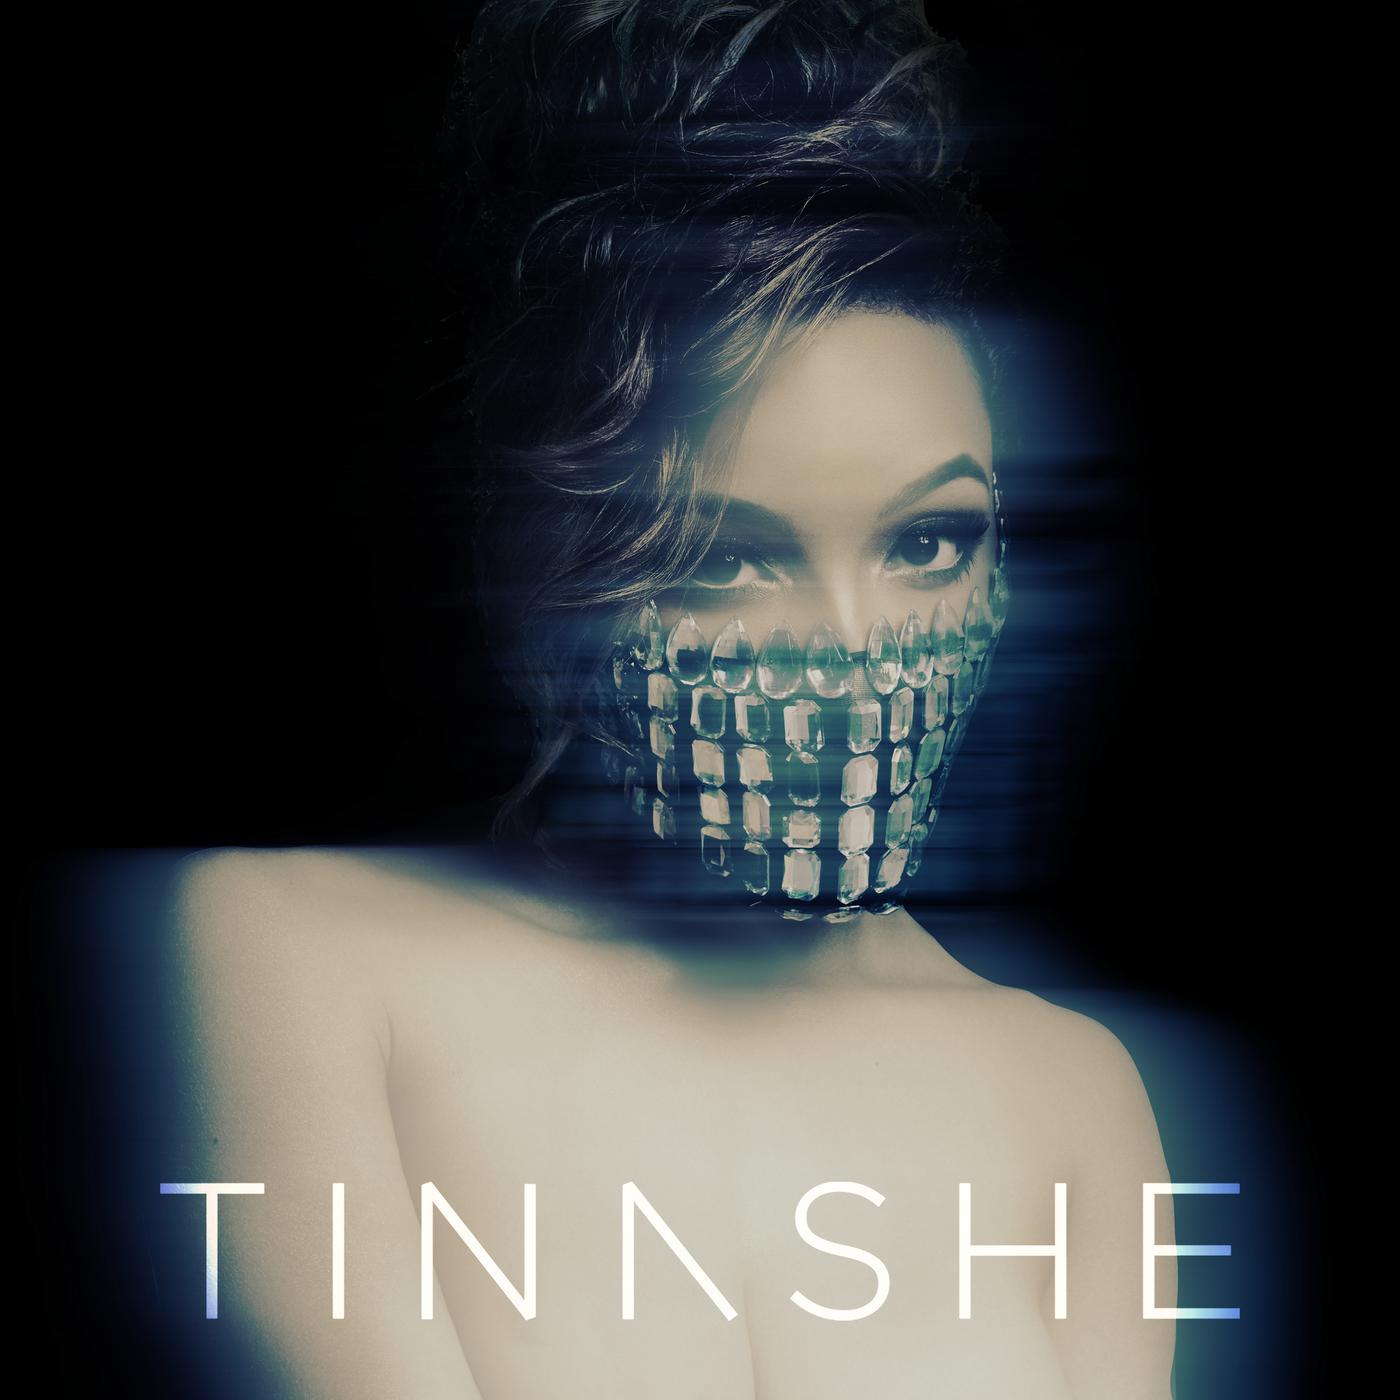 How Many Times歌词 歌手Tinashe / Future-专辑Aquarius-单曲《How Many Times》LRC歌词下载